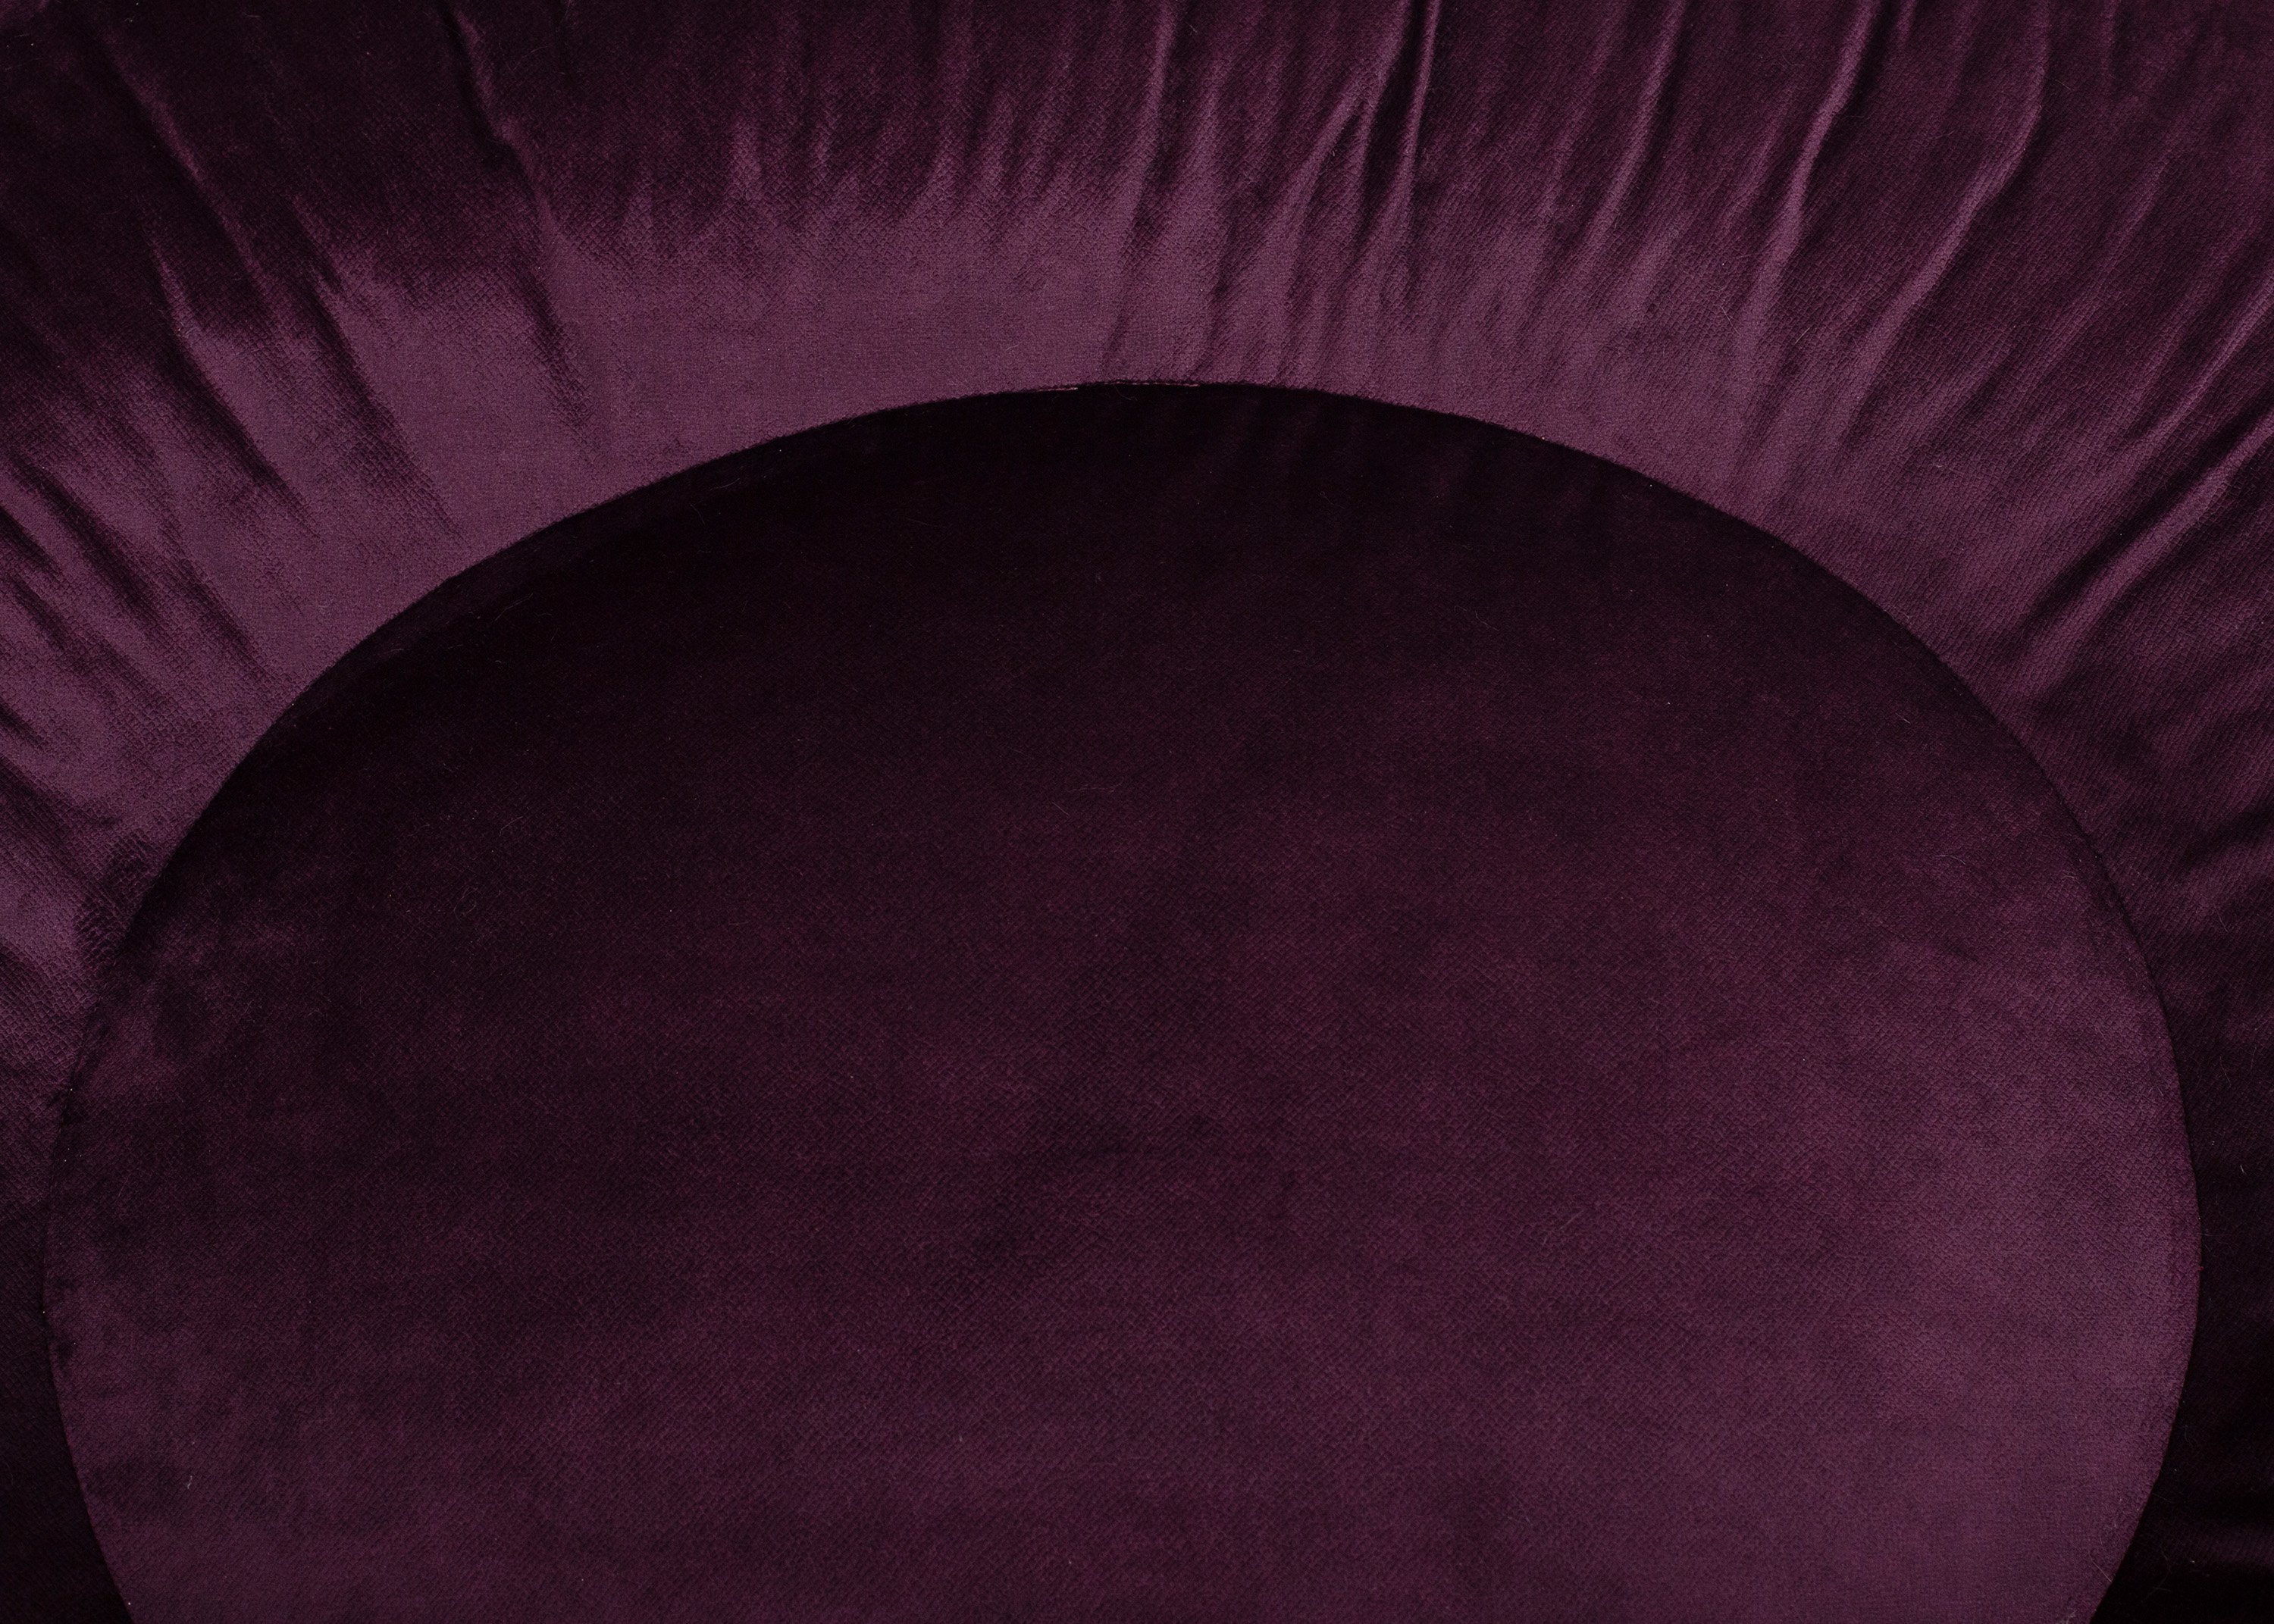 Wau-Bed Pets Friendly Purple Oval XL (140x120cm)